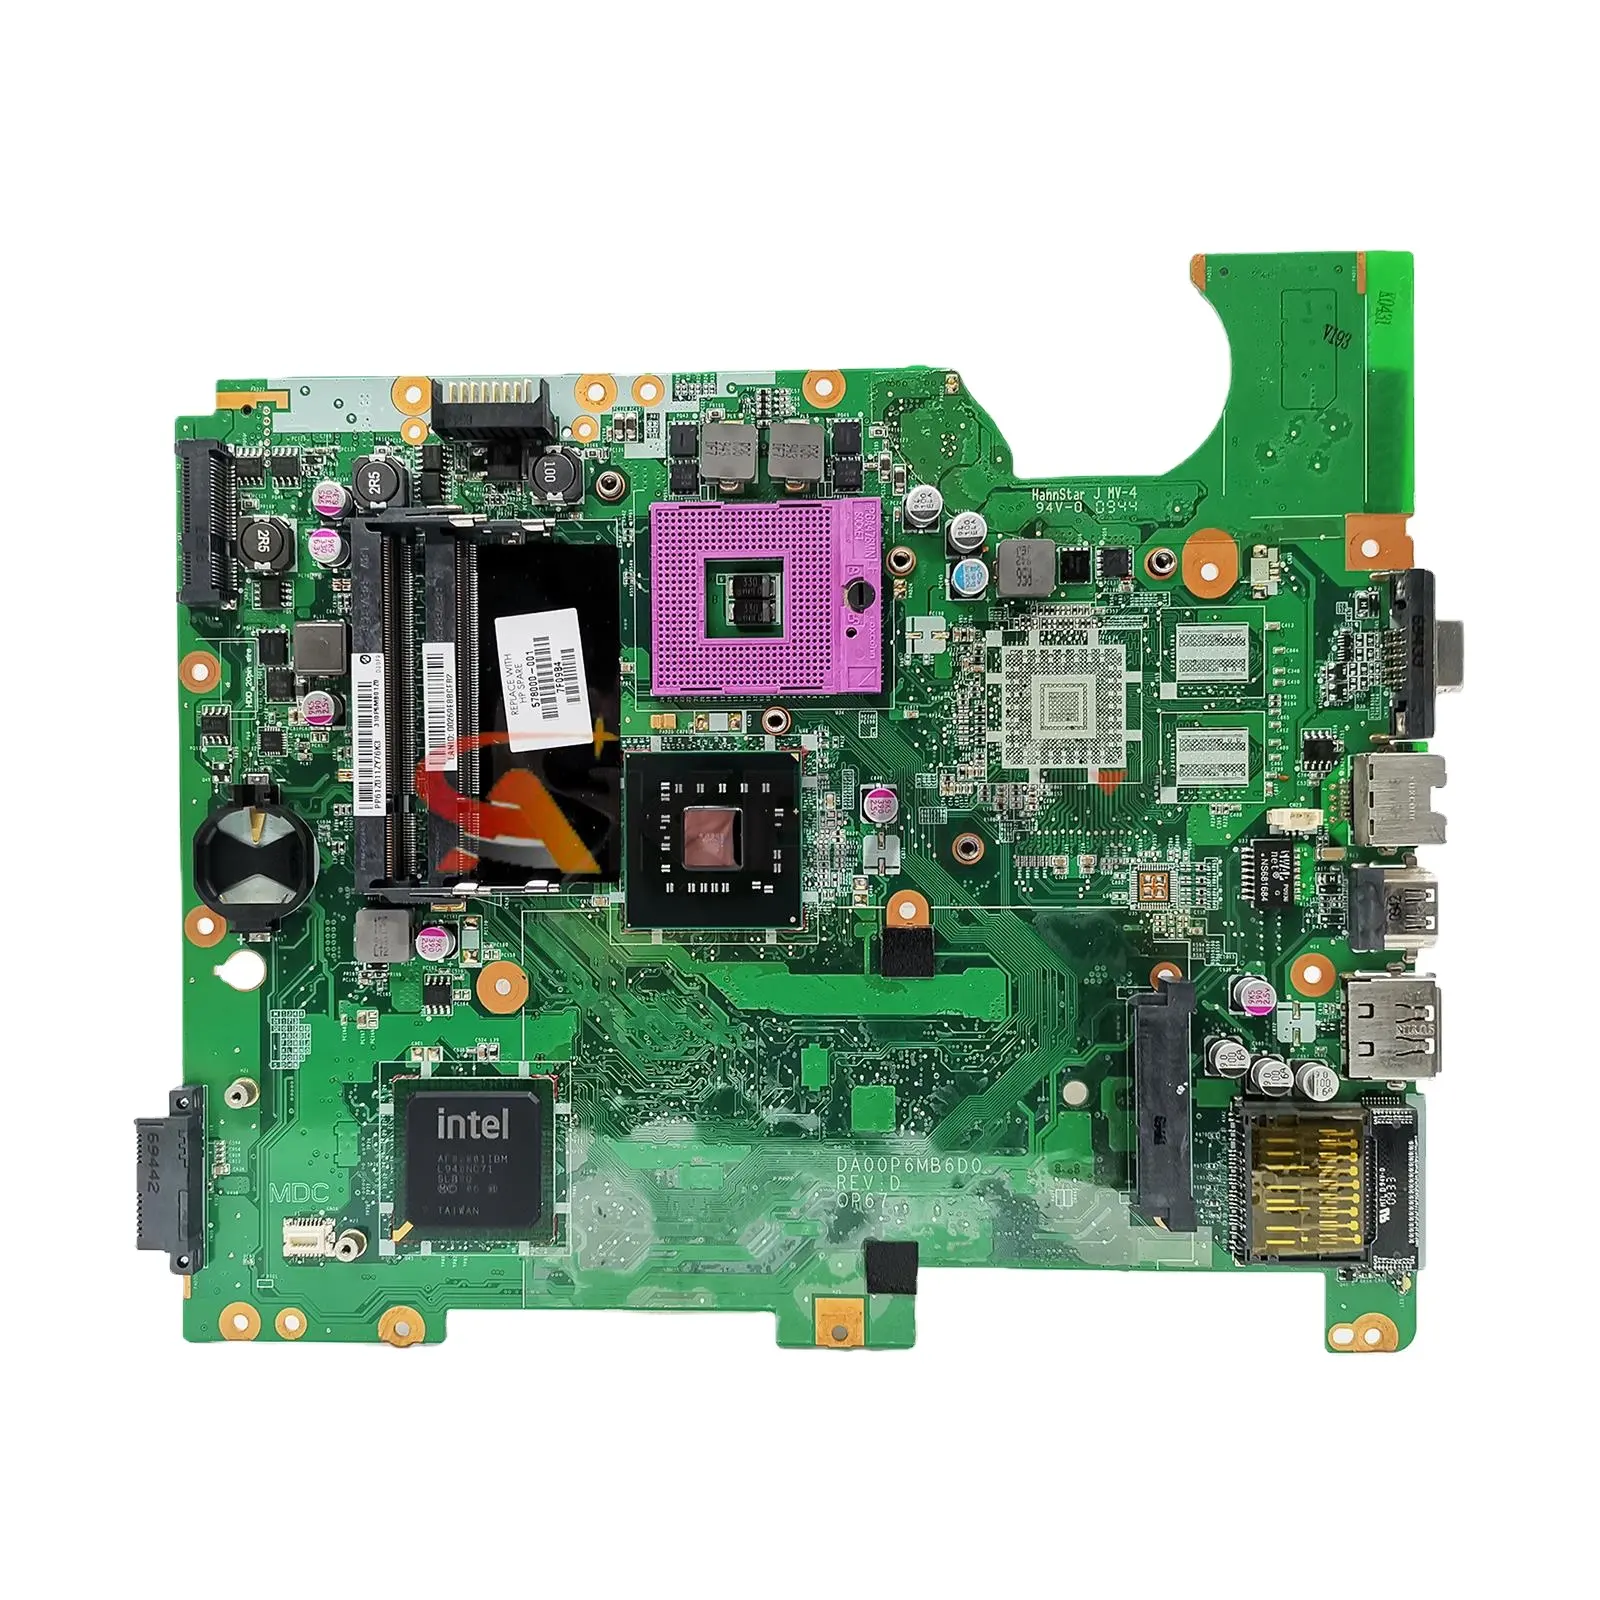 Placa base para portátil HP Compaq Presario CQ61 G61, 577997-001, 577997-501, 577997-601, DA00P6MB6D0 con Intel GL40 DDR2 100% probado